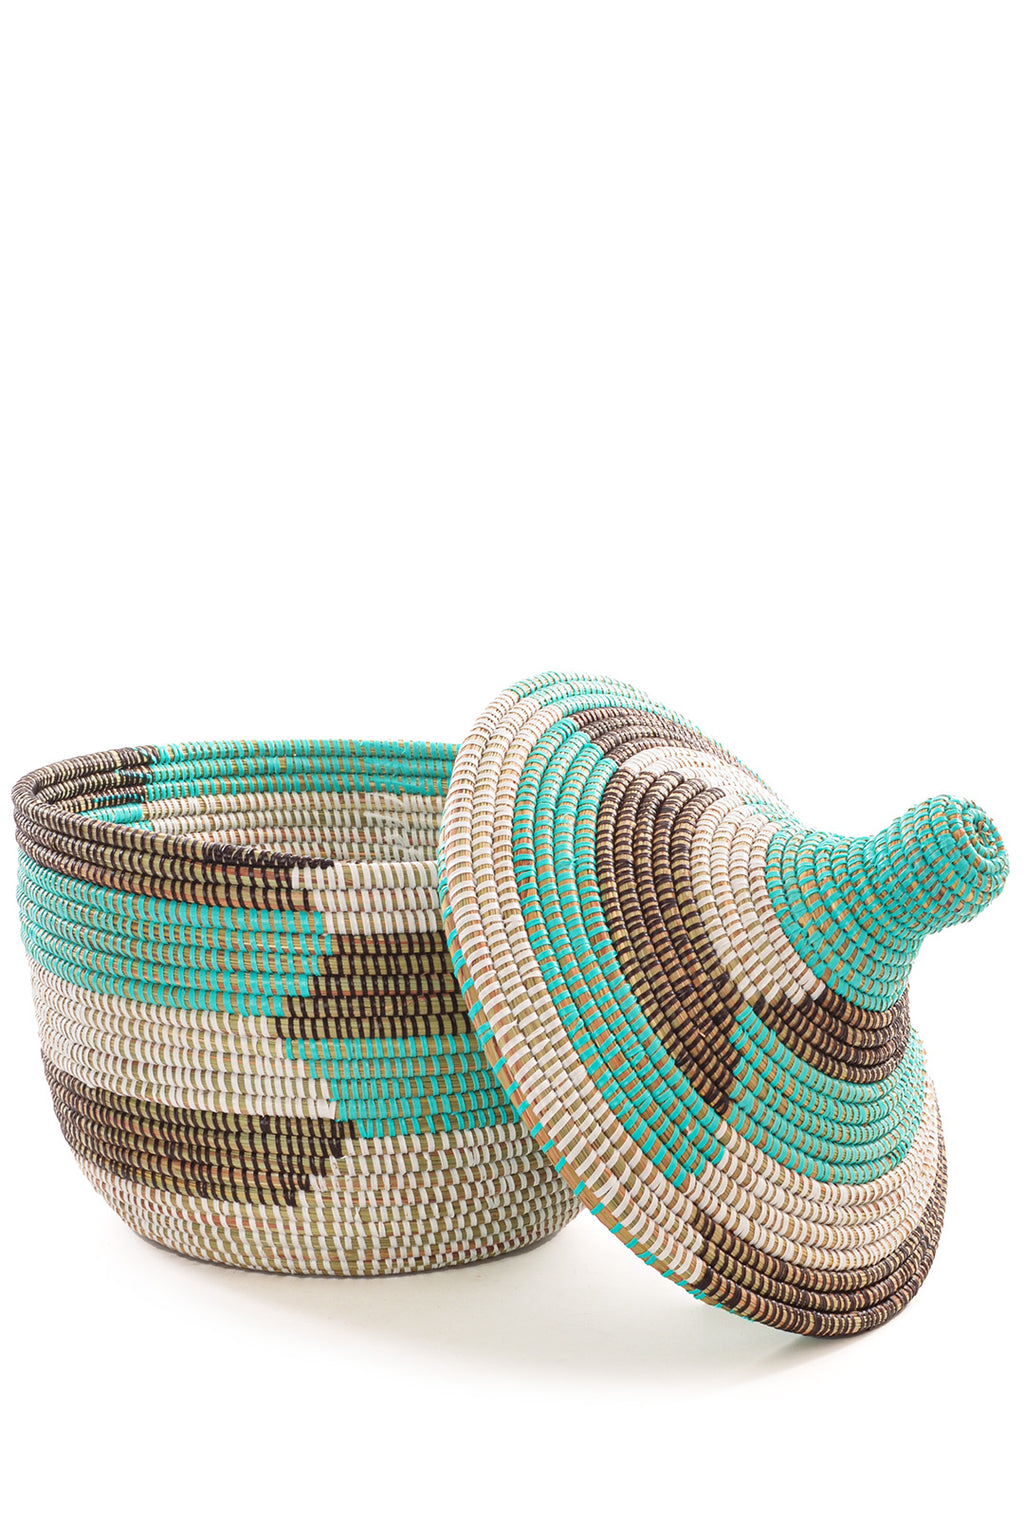 Sahel Sky Warming Basket